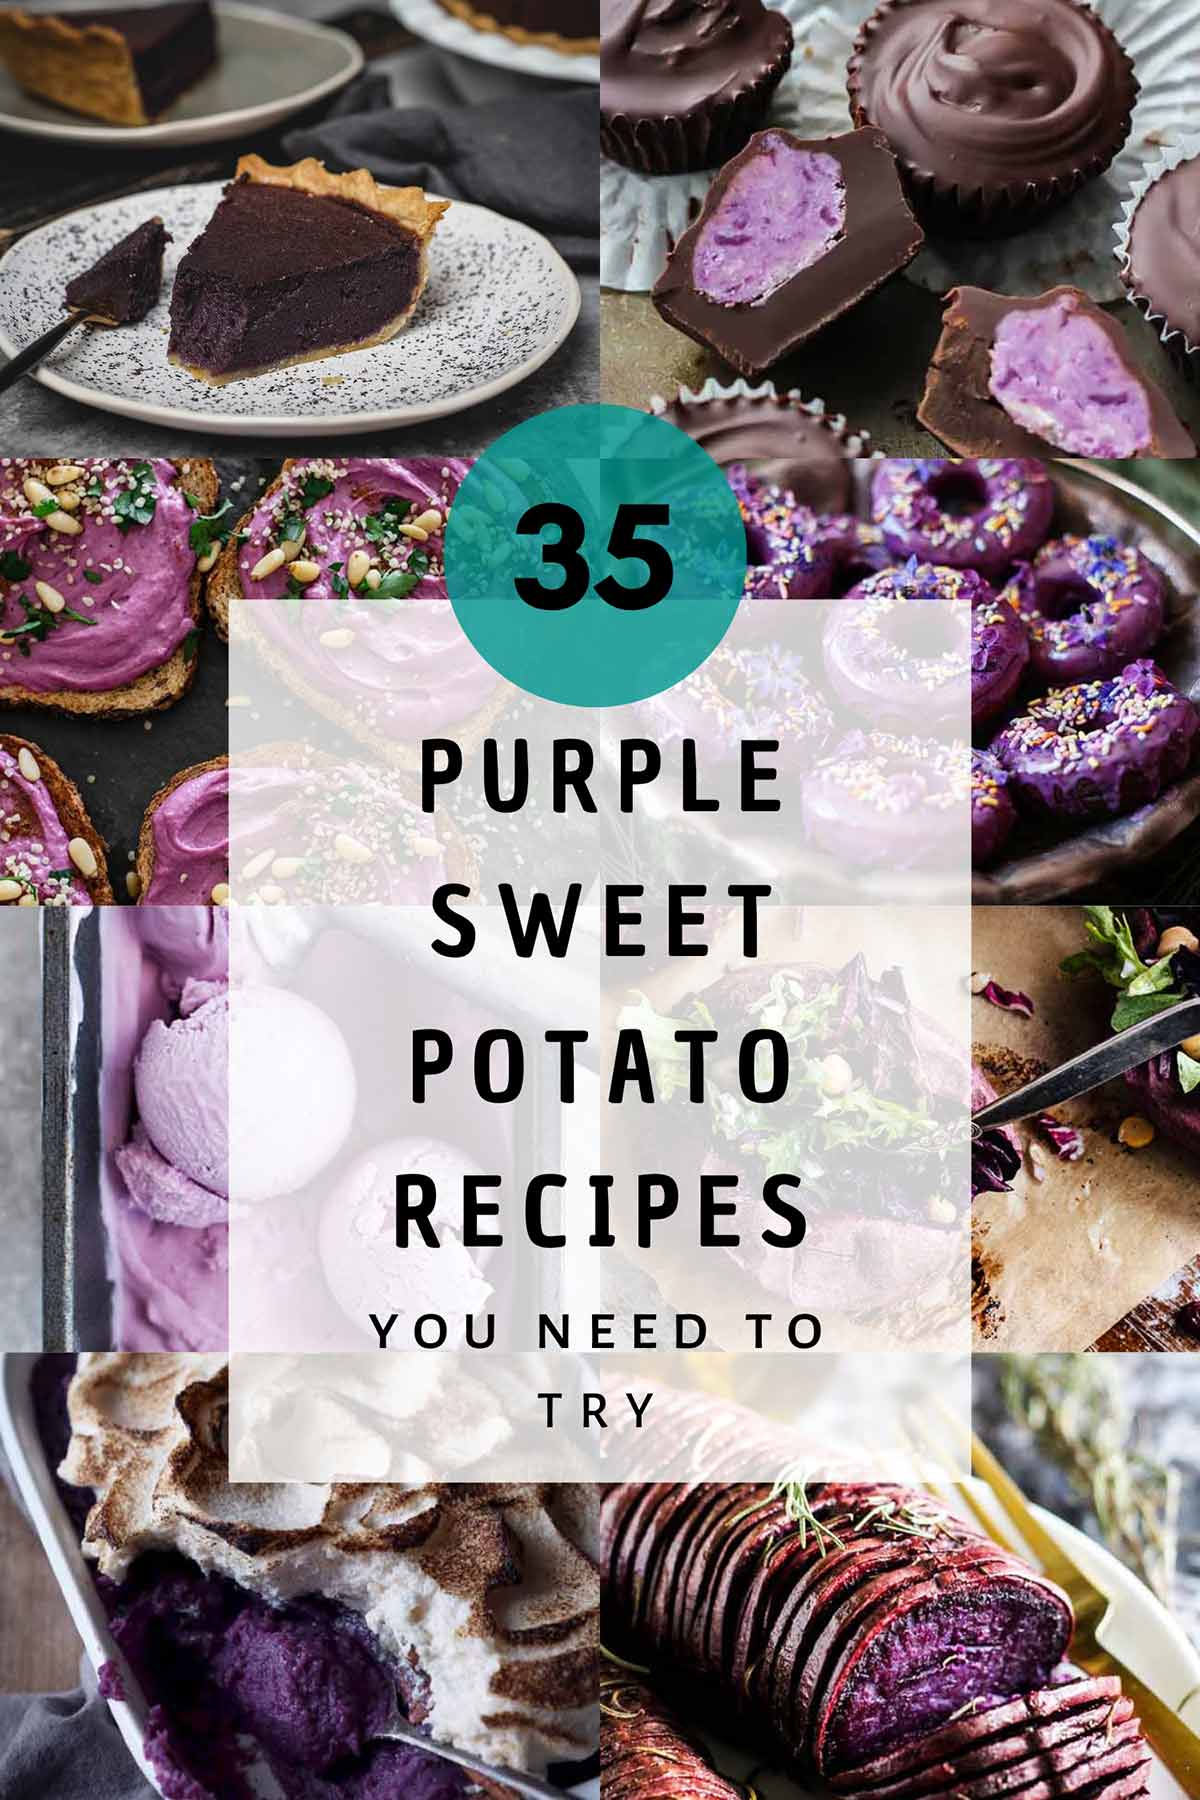 Purple sweet potato recipes featured image